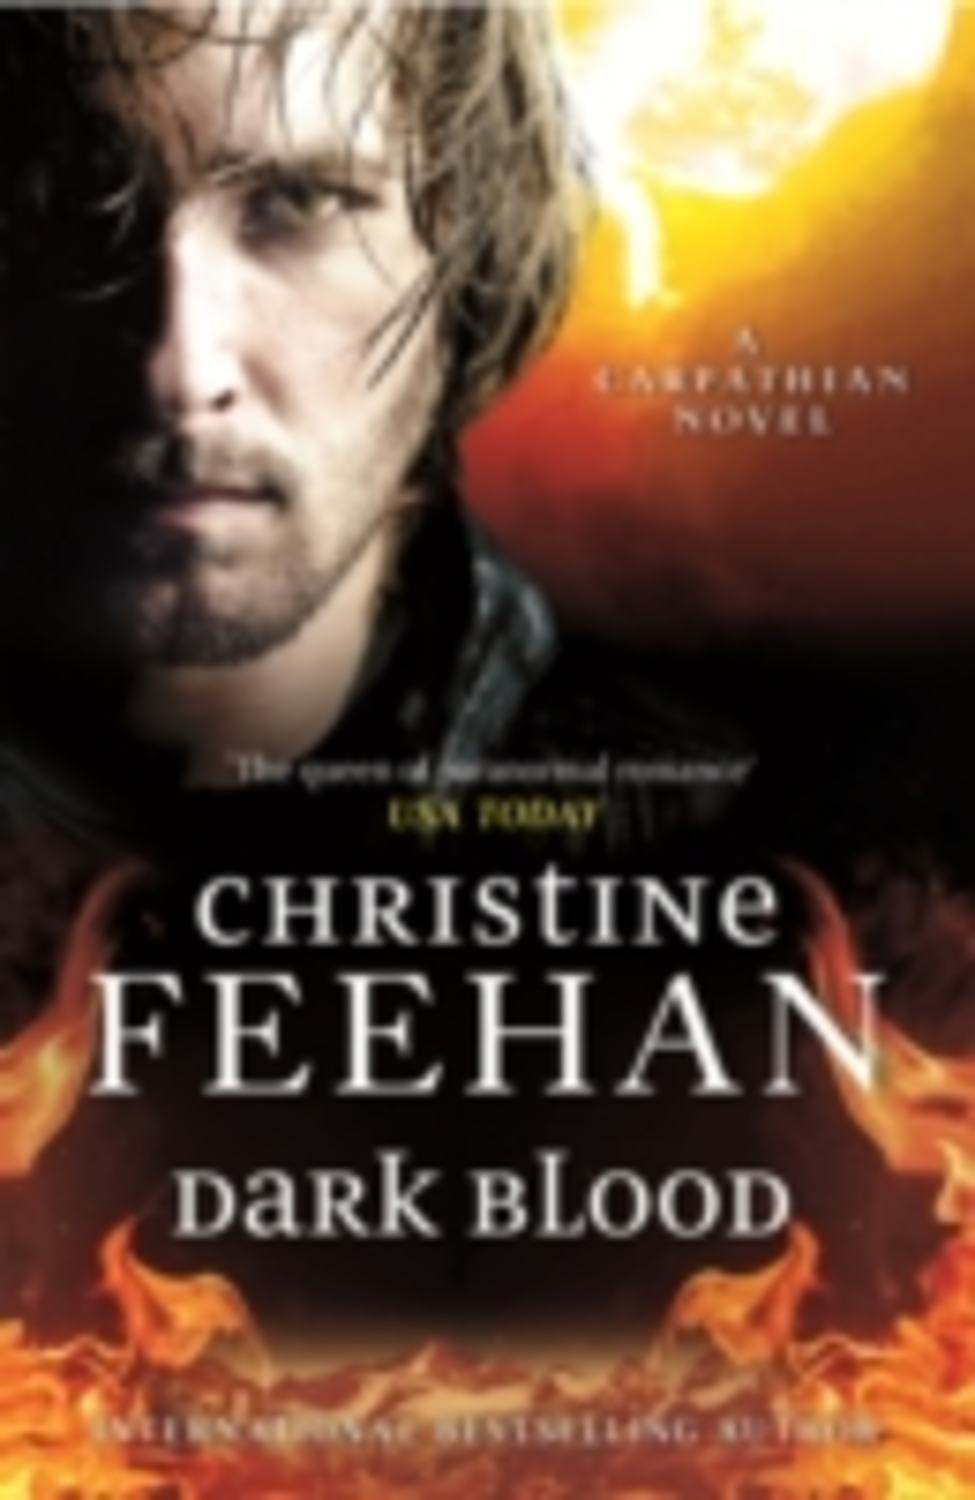 Christine feehan dark series pdf download